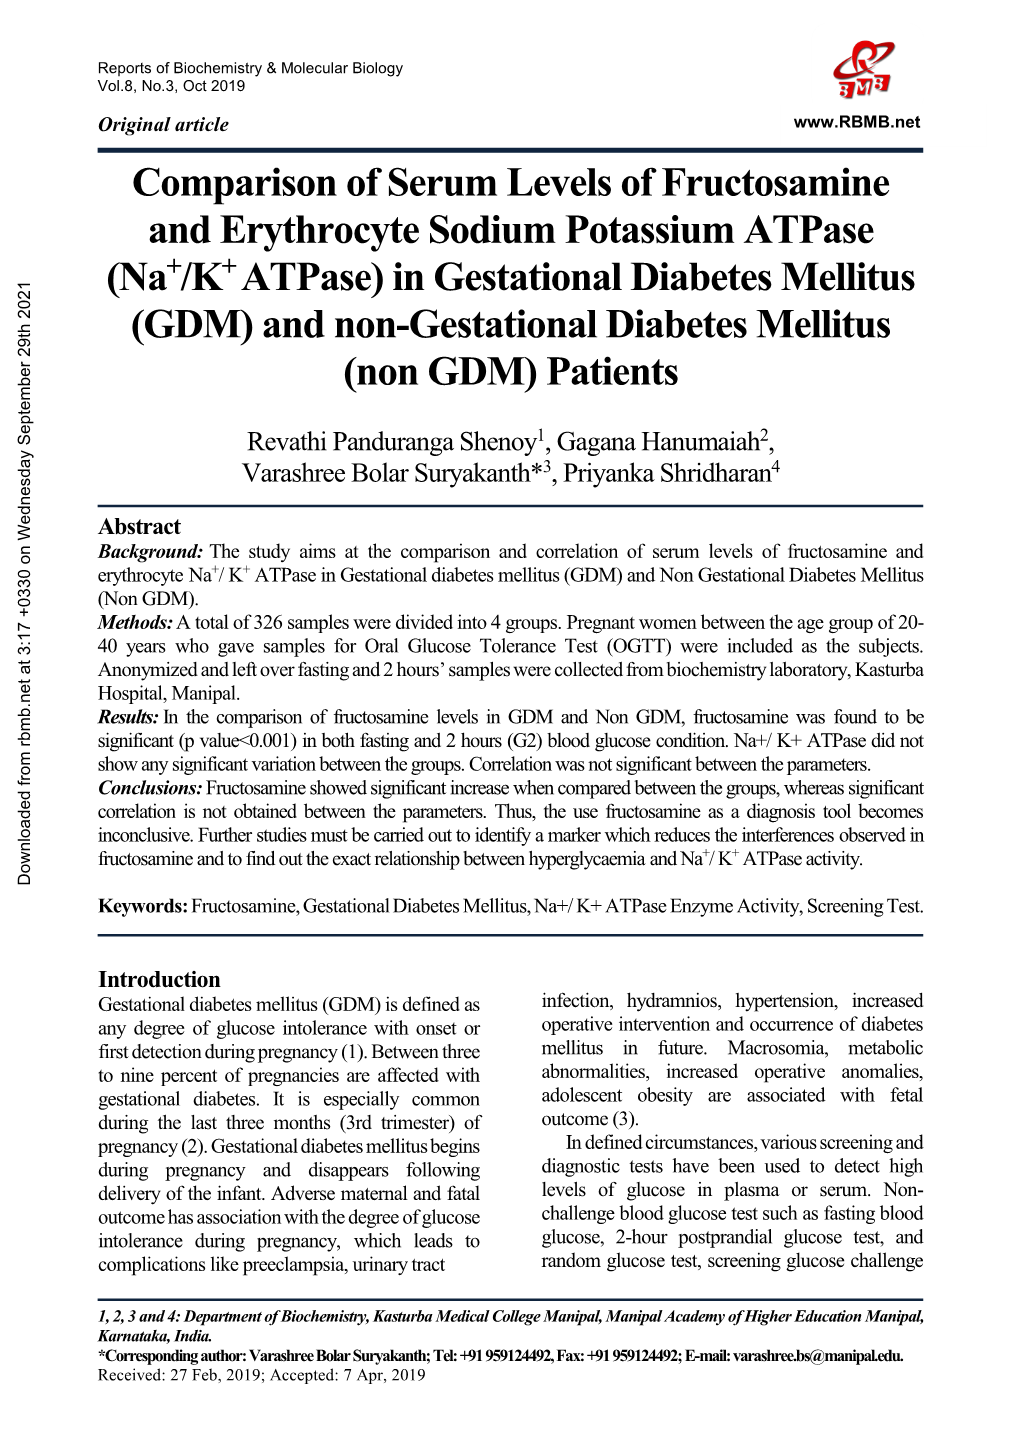 Na+/K+ Atpase) in Gestational Diabetes Mellitus (GDM) and Non-Gestational Diabetes Mellitus (Non GDM) Patients